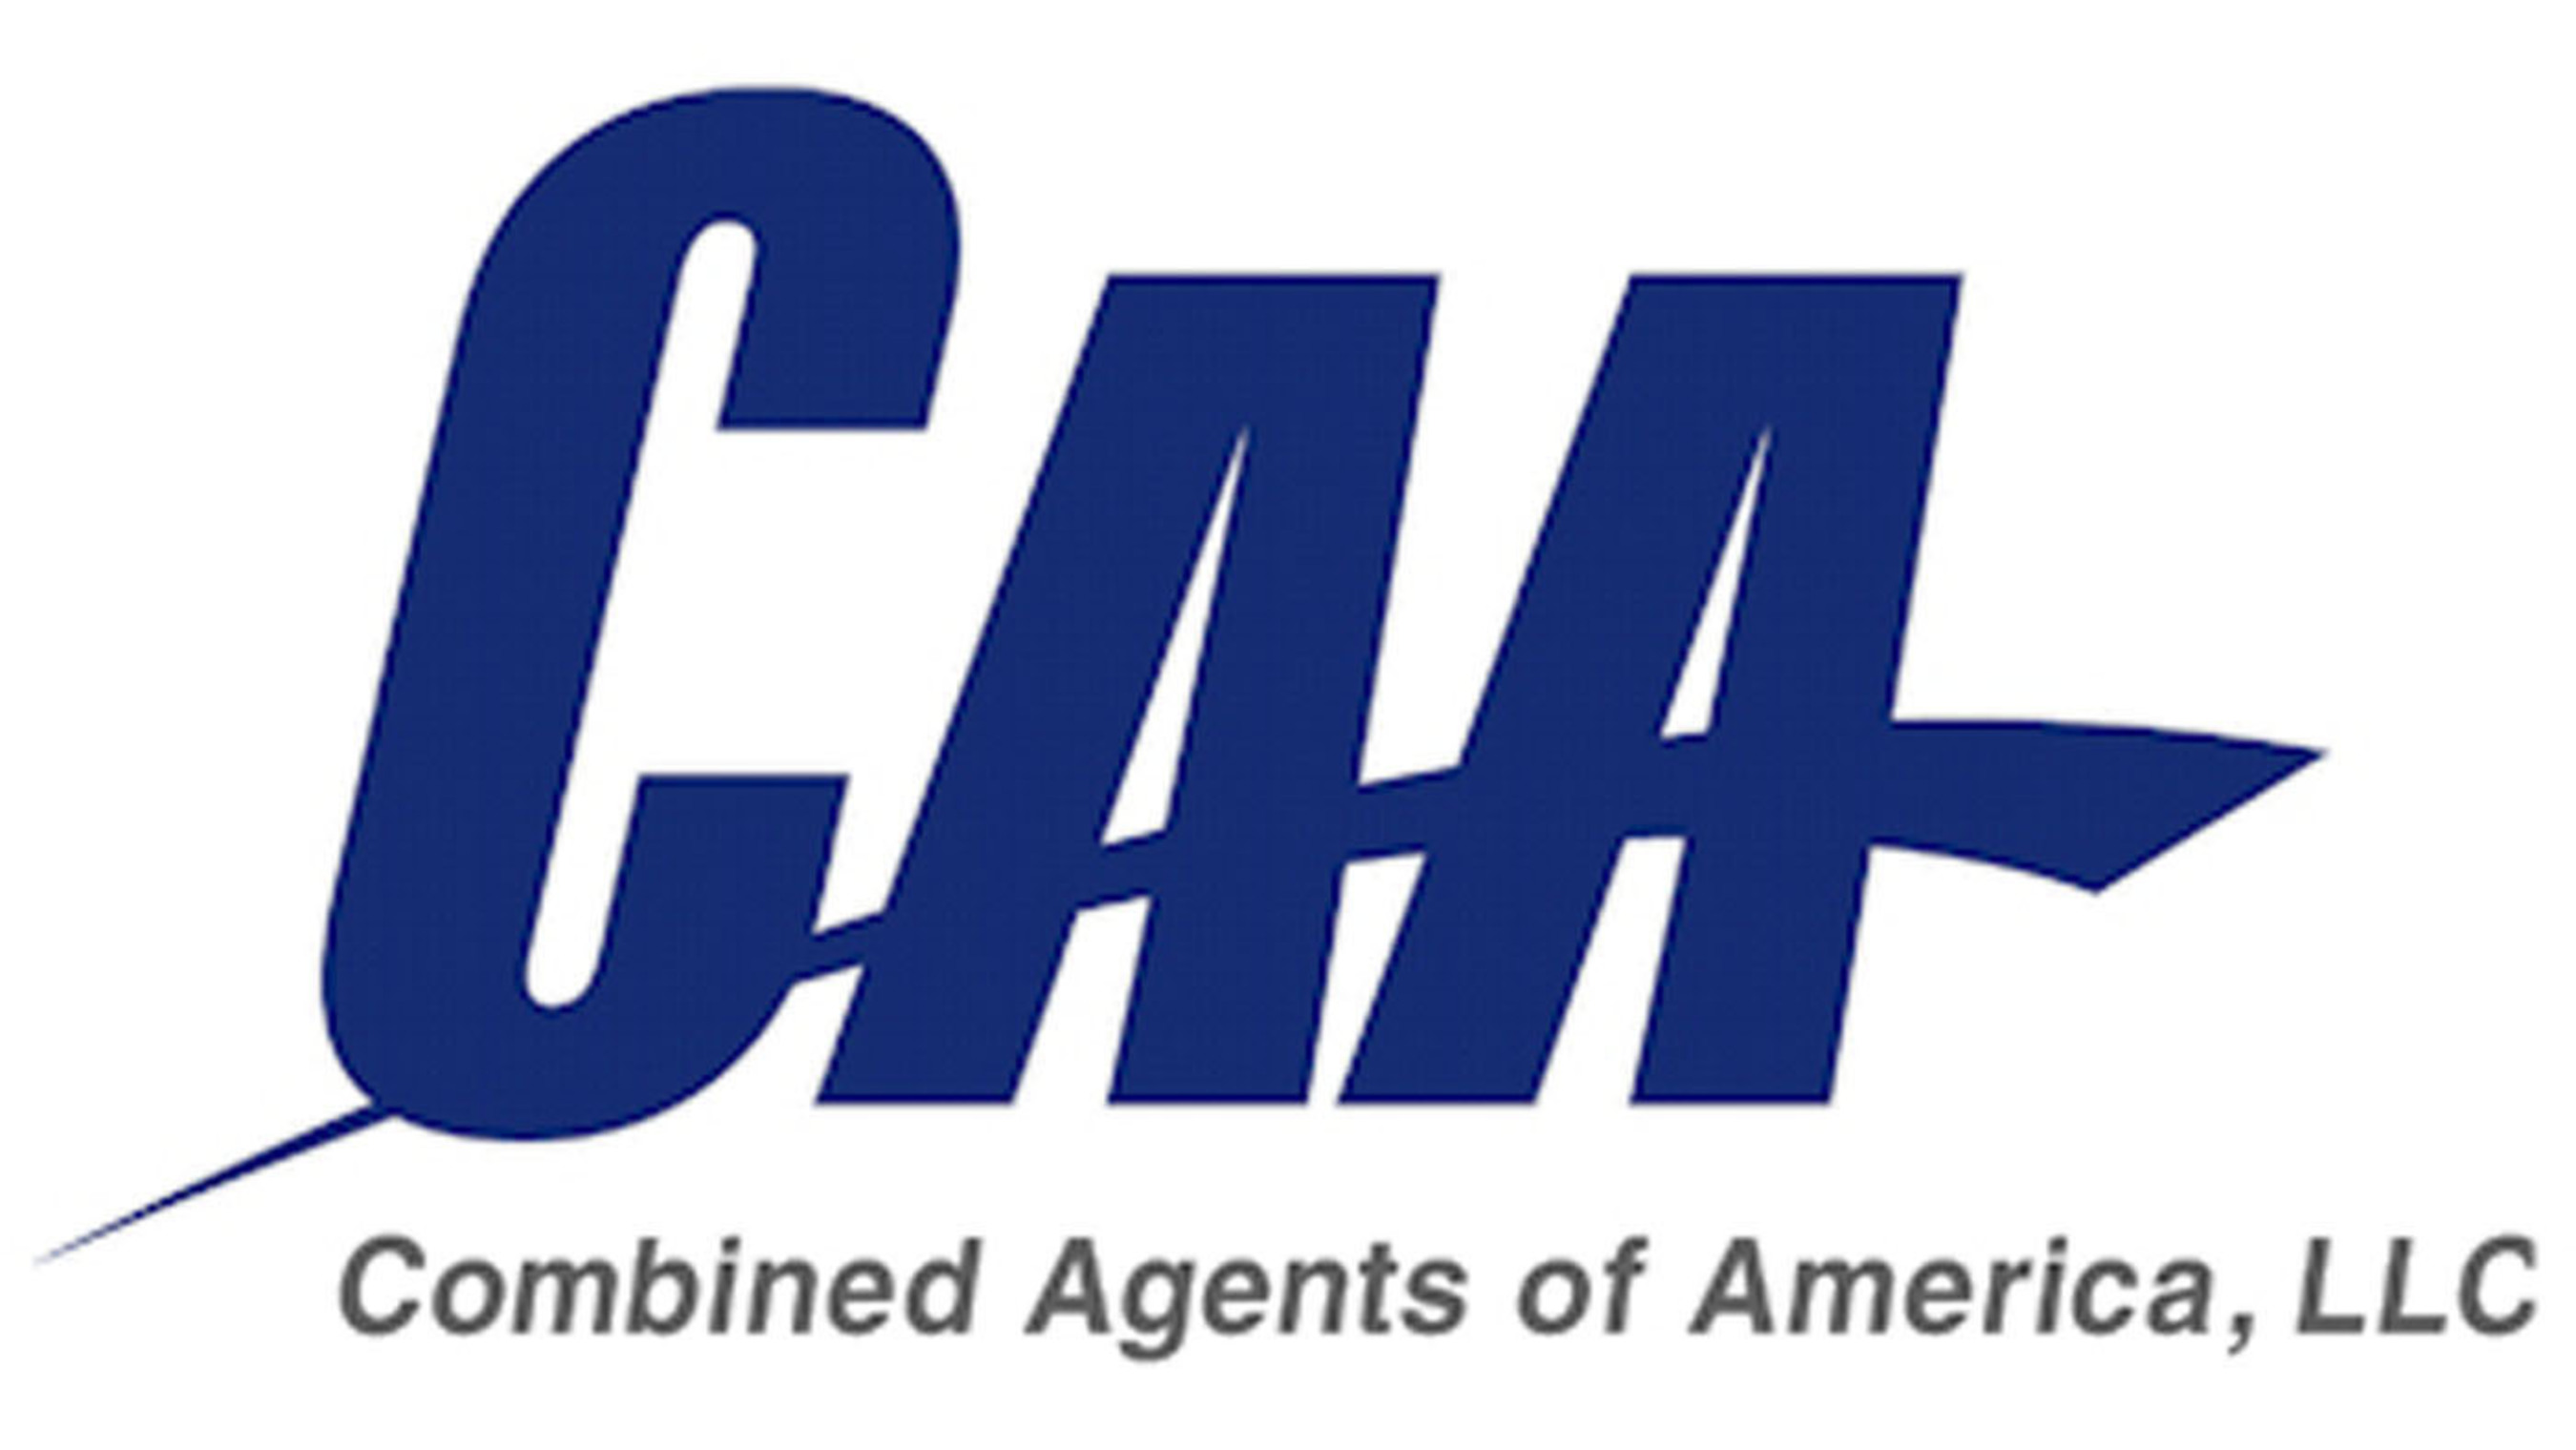 Combined Agents of America, LLC Logo.